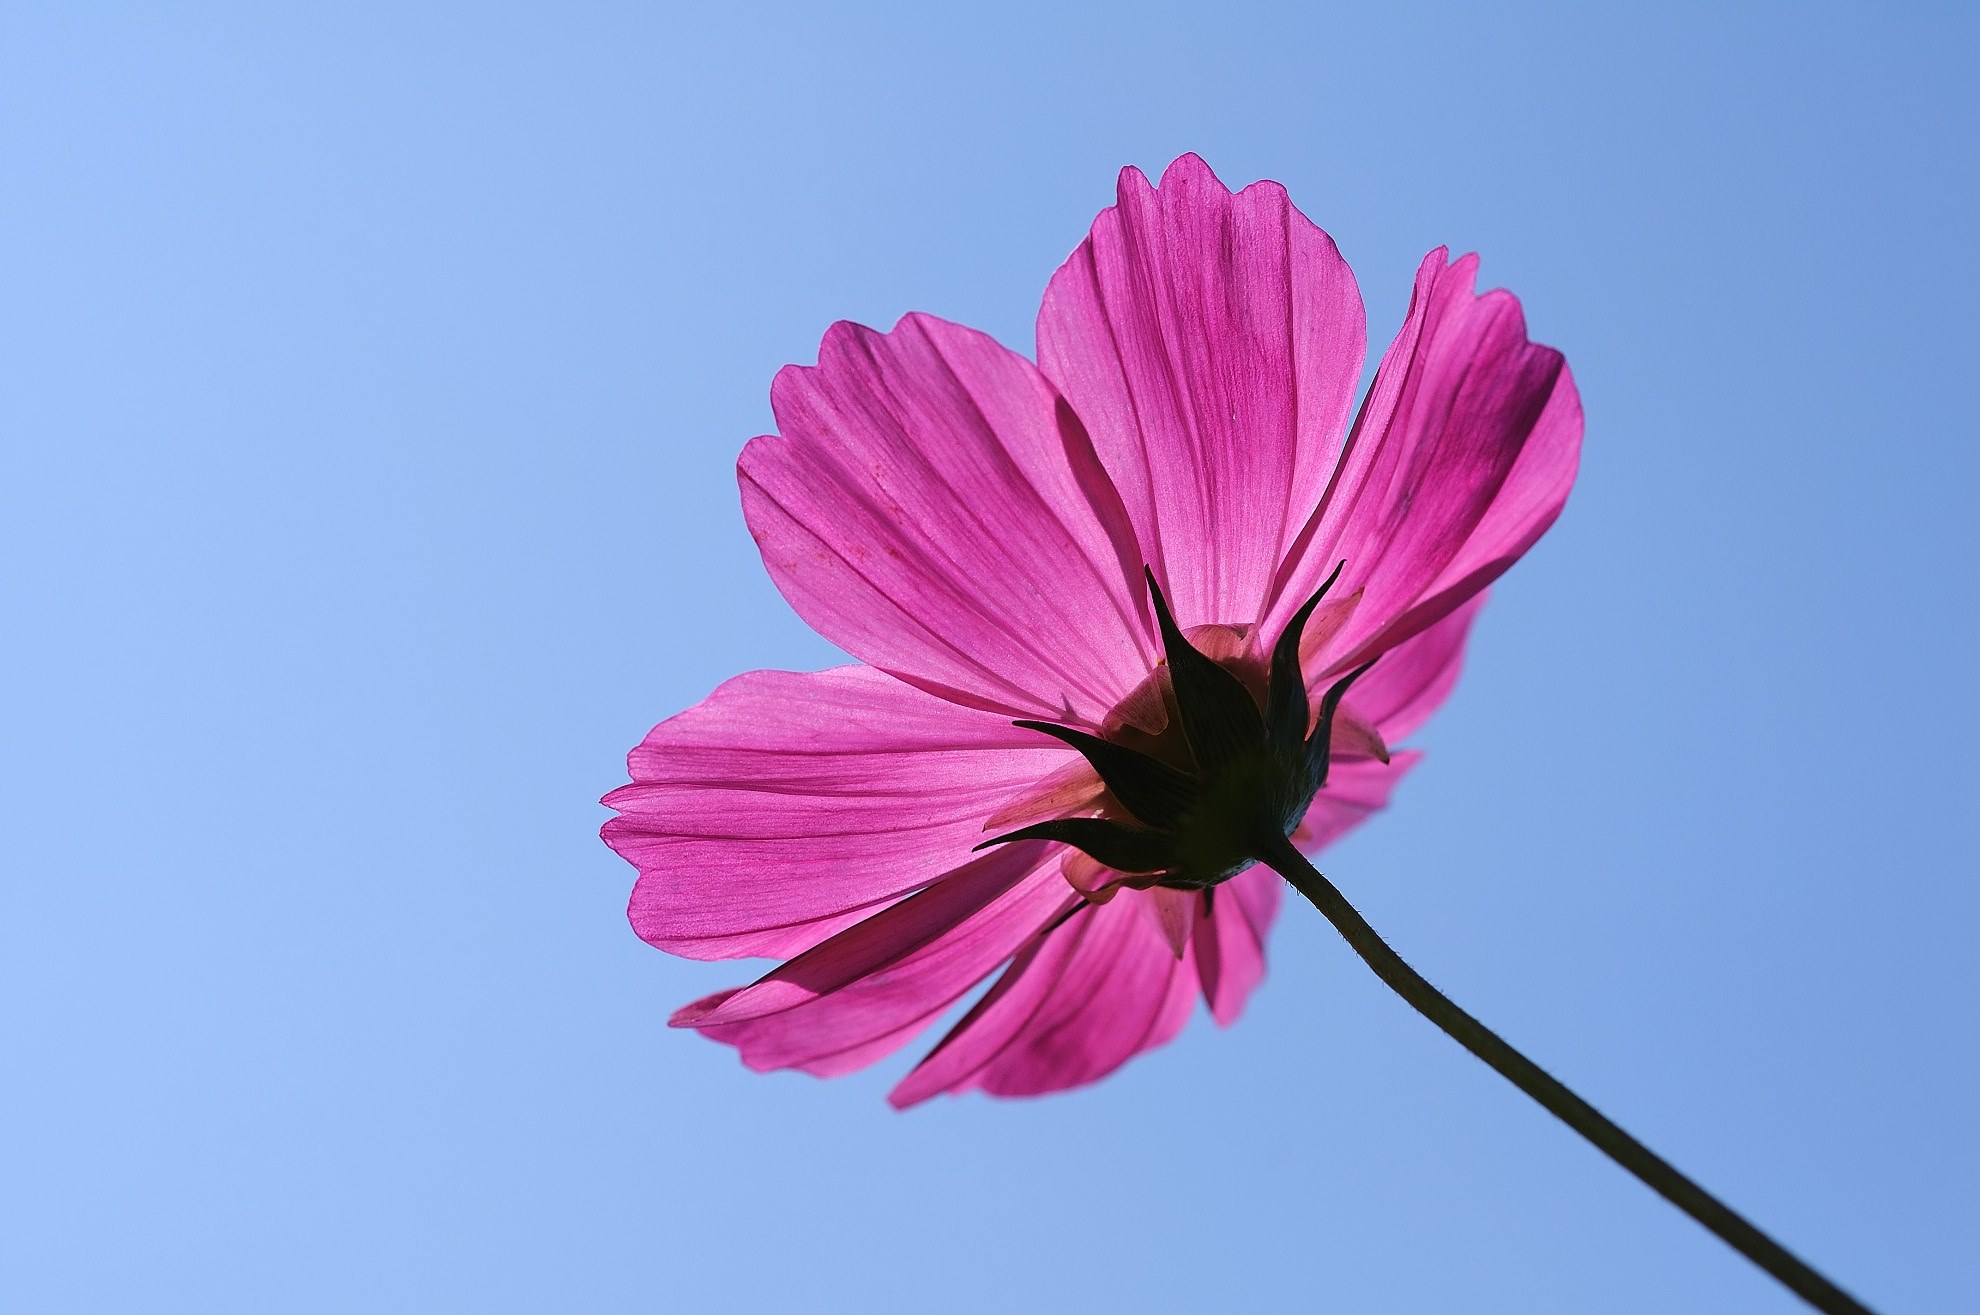 291635-flower-universe-plant-cosmos-single-pink-petals